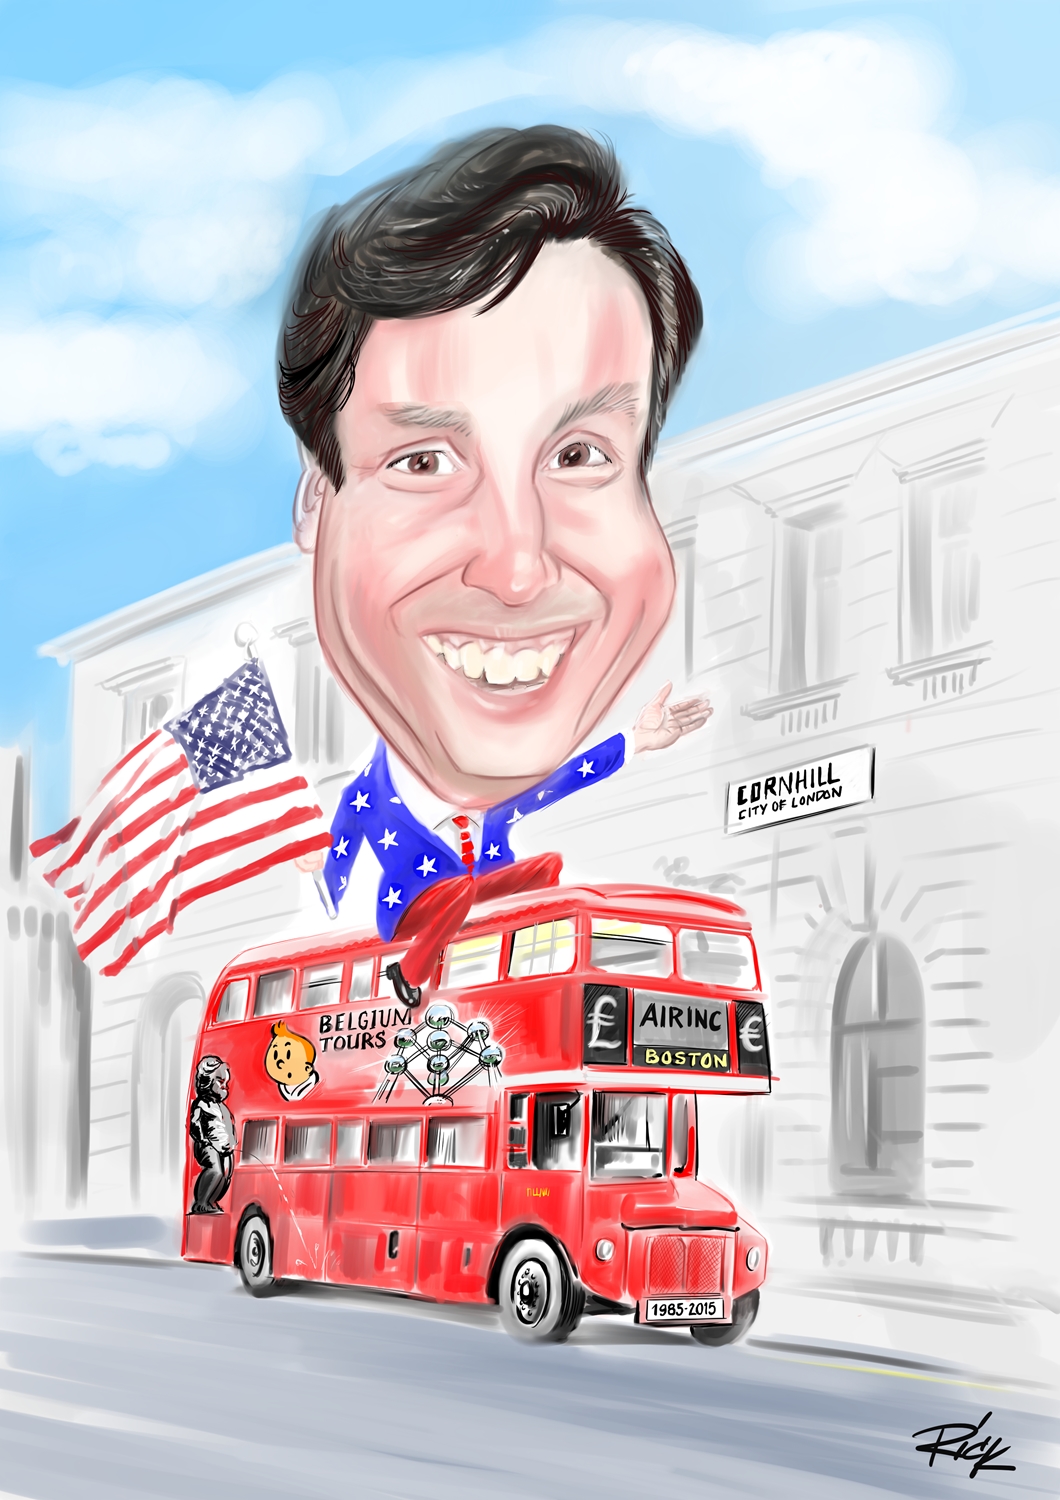 Caricature of man riding London bus waving American flag